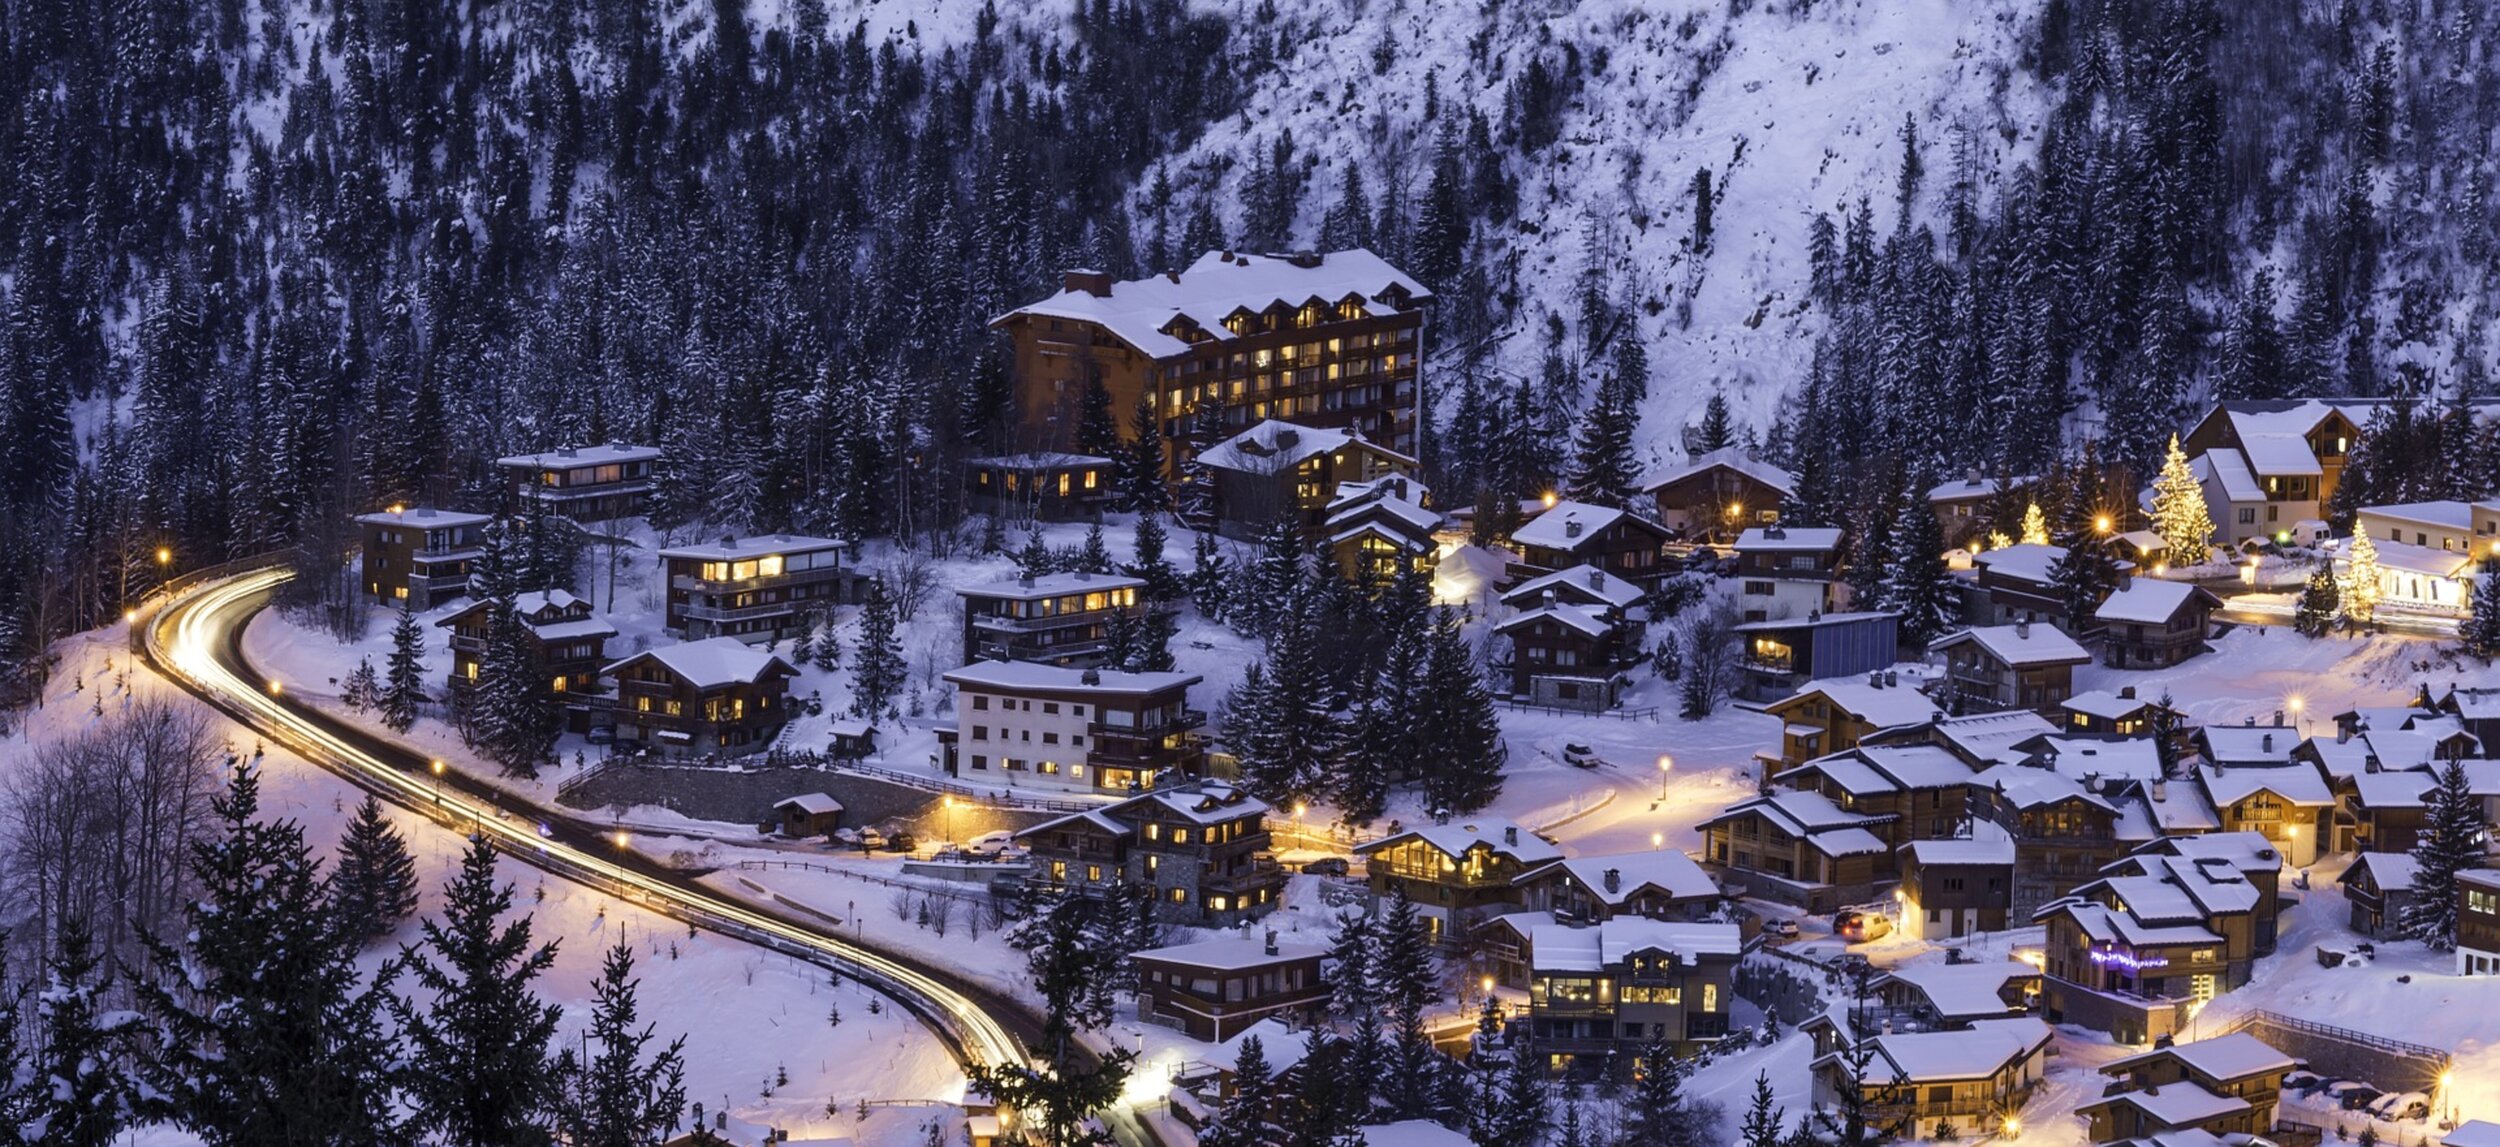 Luxury Ski Resort.jpg